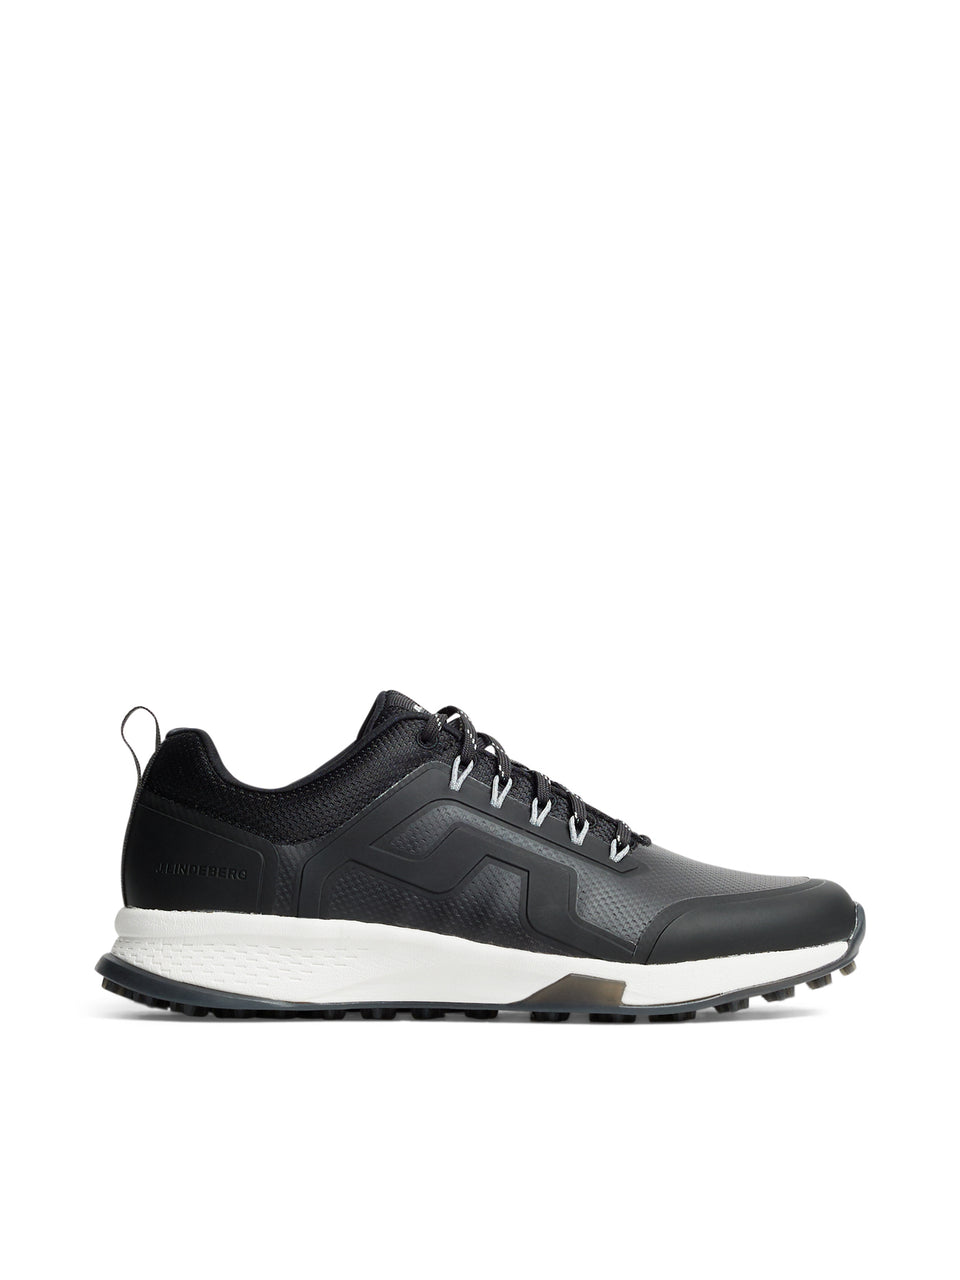 Range Finder Golf Sneaker W / Black